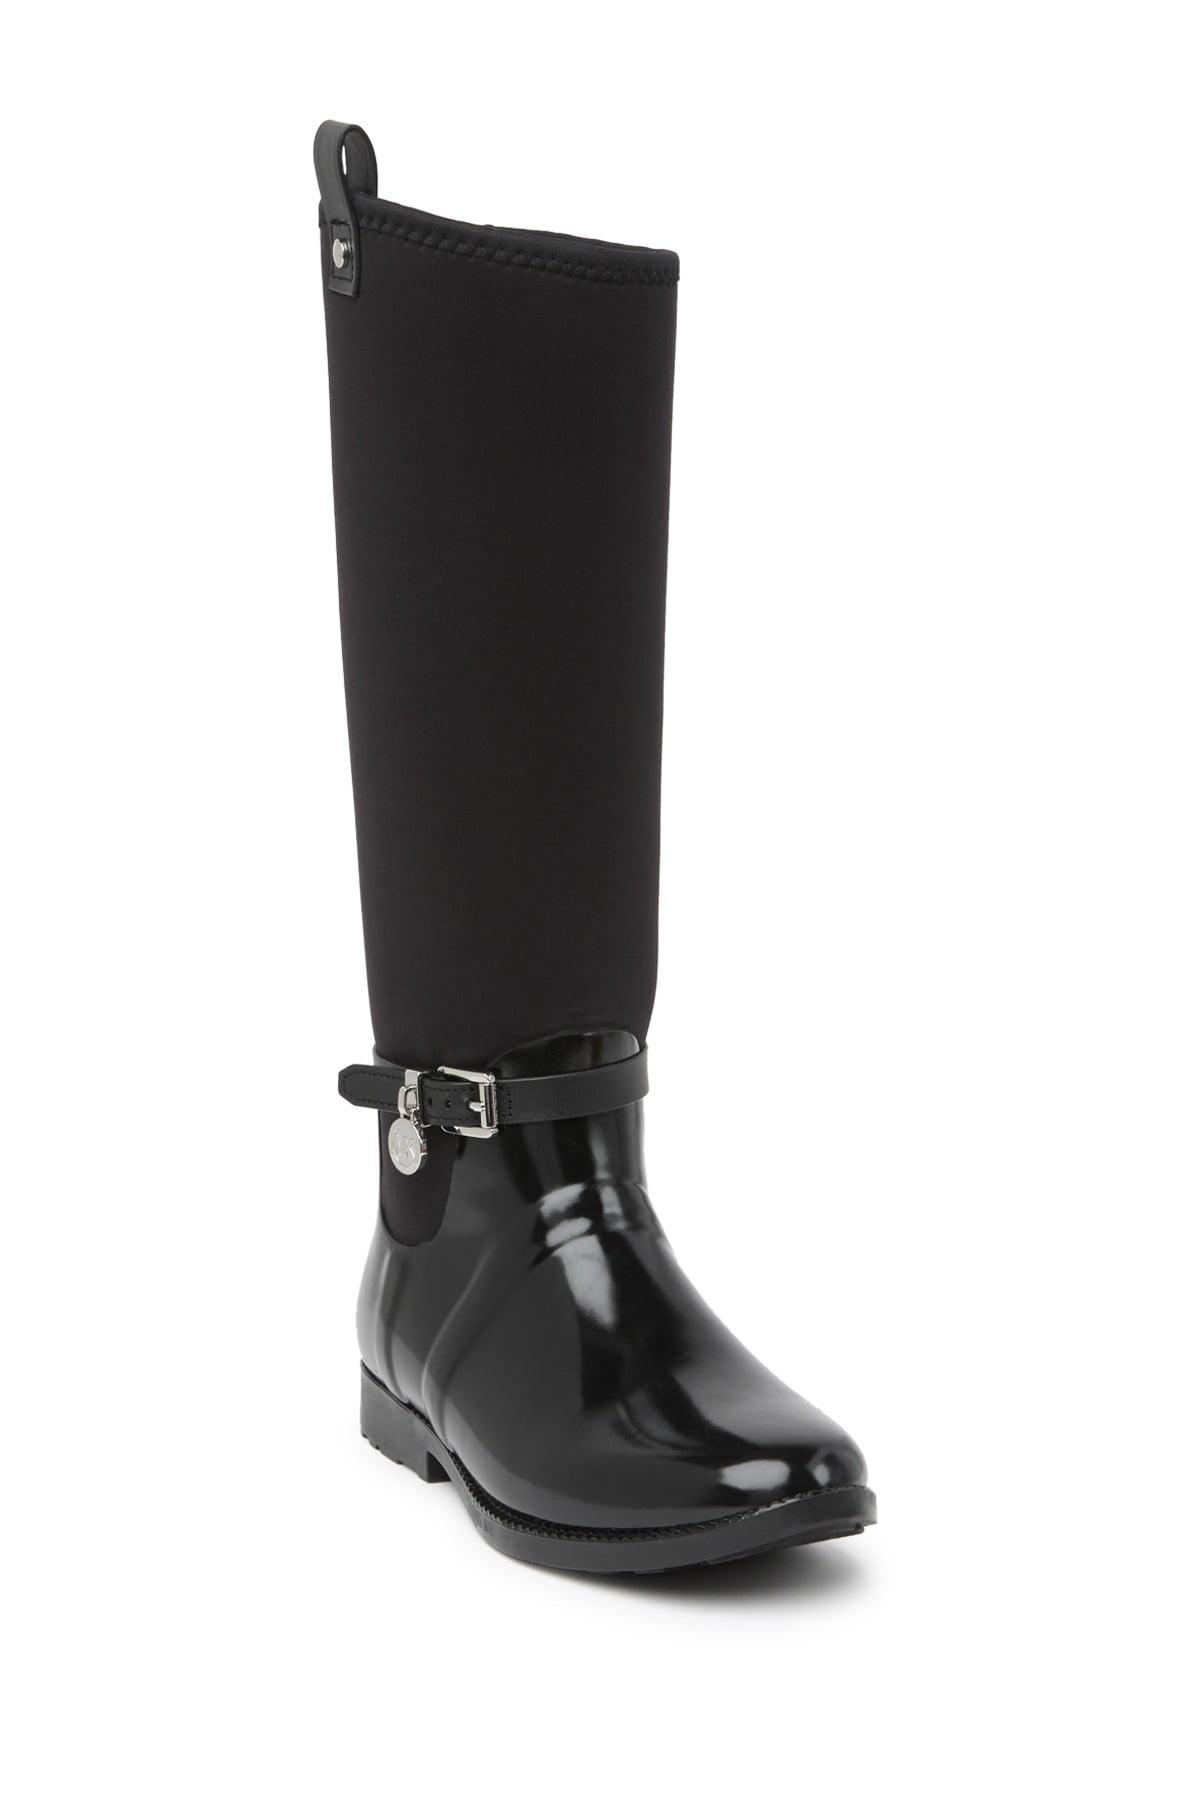 Michael Kors Charm Stretch Rain Boots Flash Sales - tabsons.com 1692544916